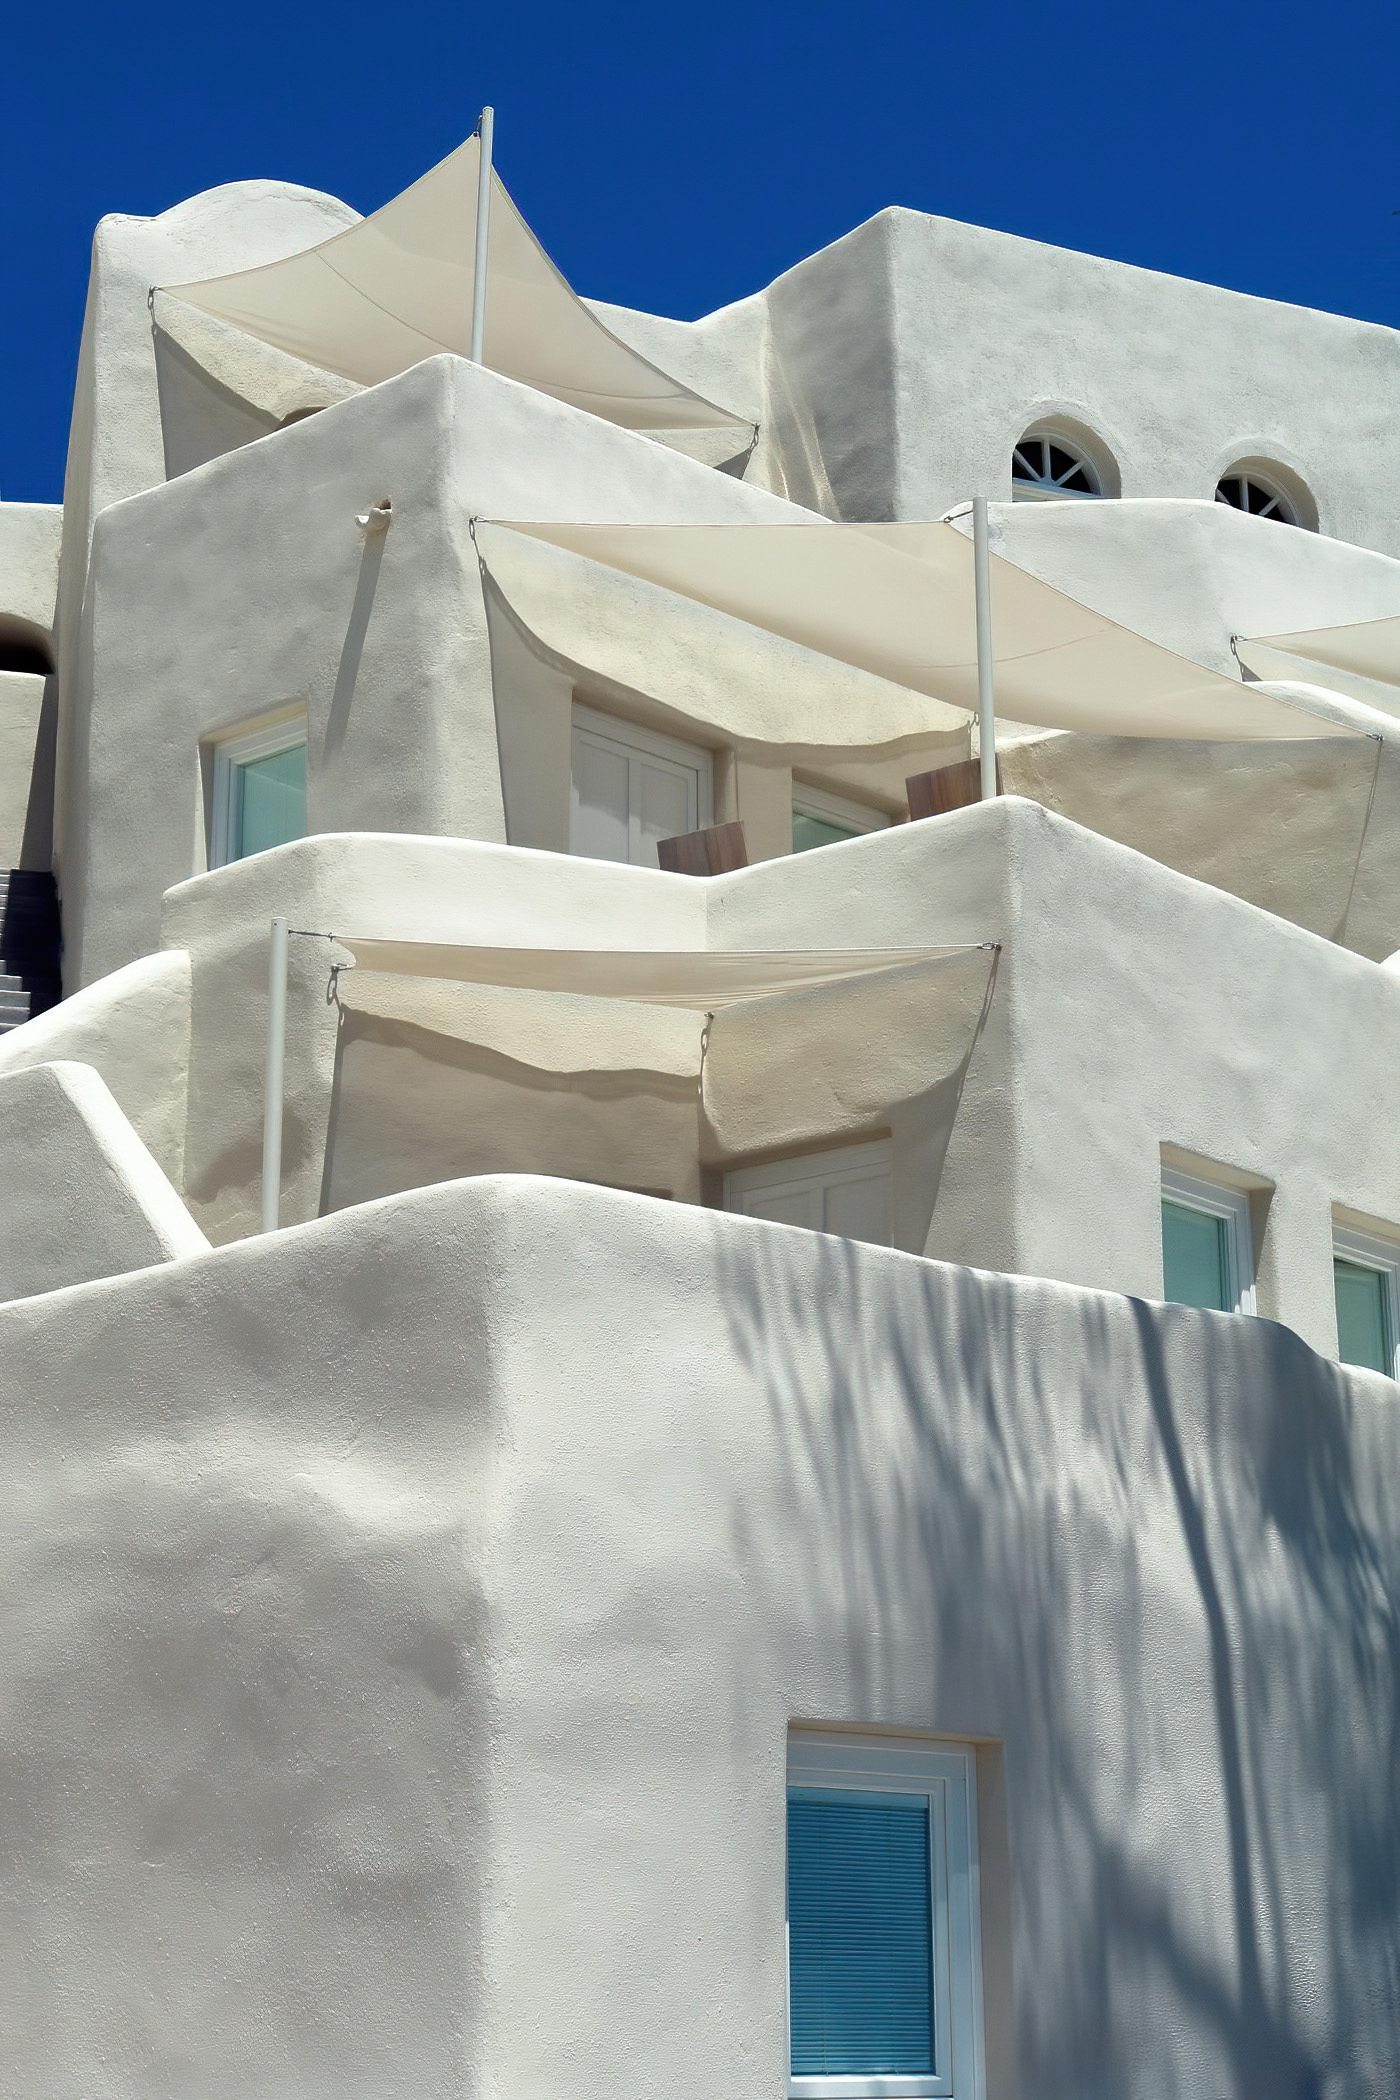 Mystique Hotel Santorini – Oia, Santorini Island, Greece – Cycladic Architecture